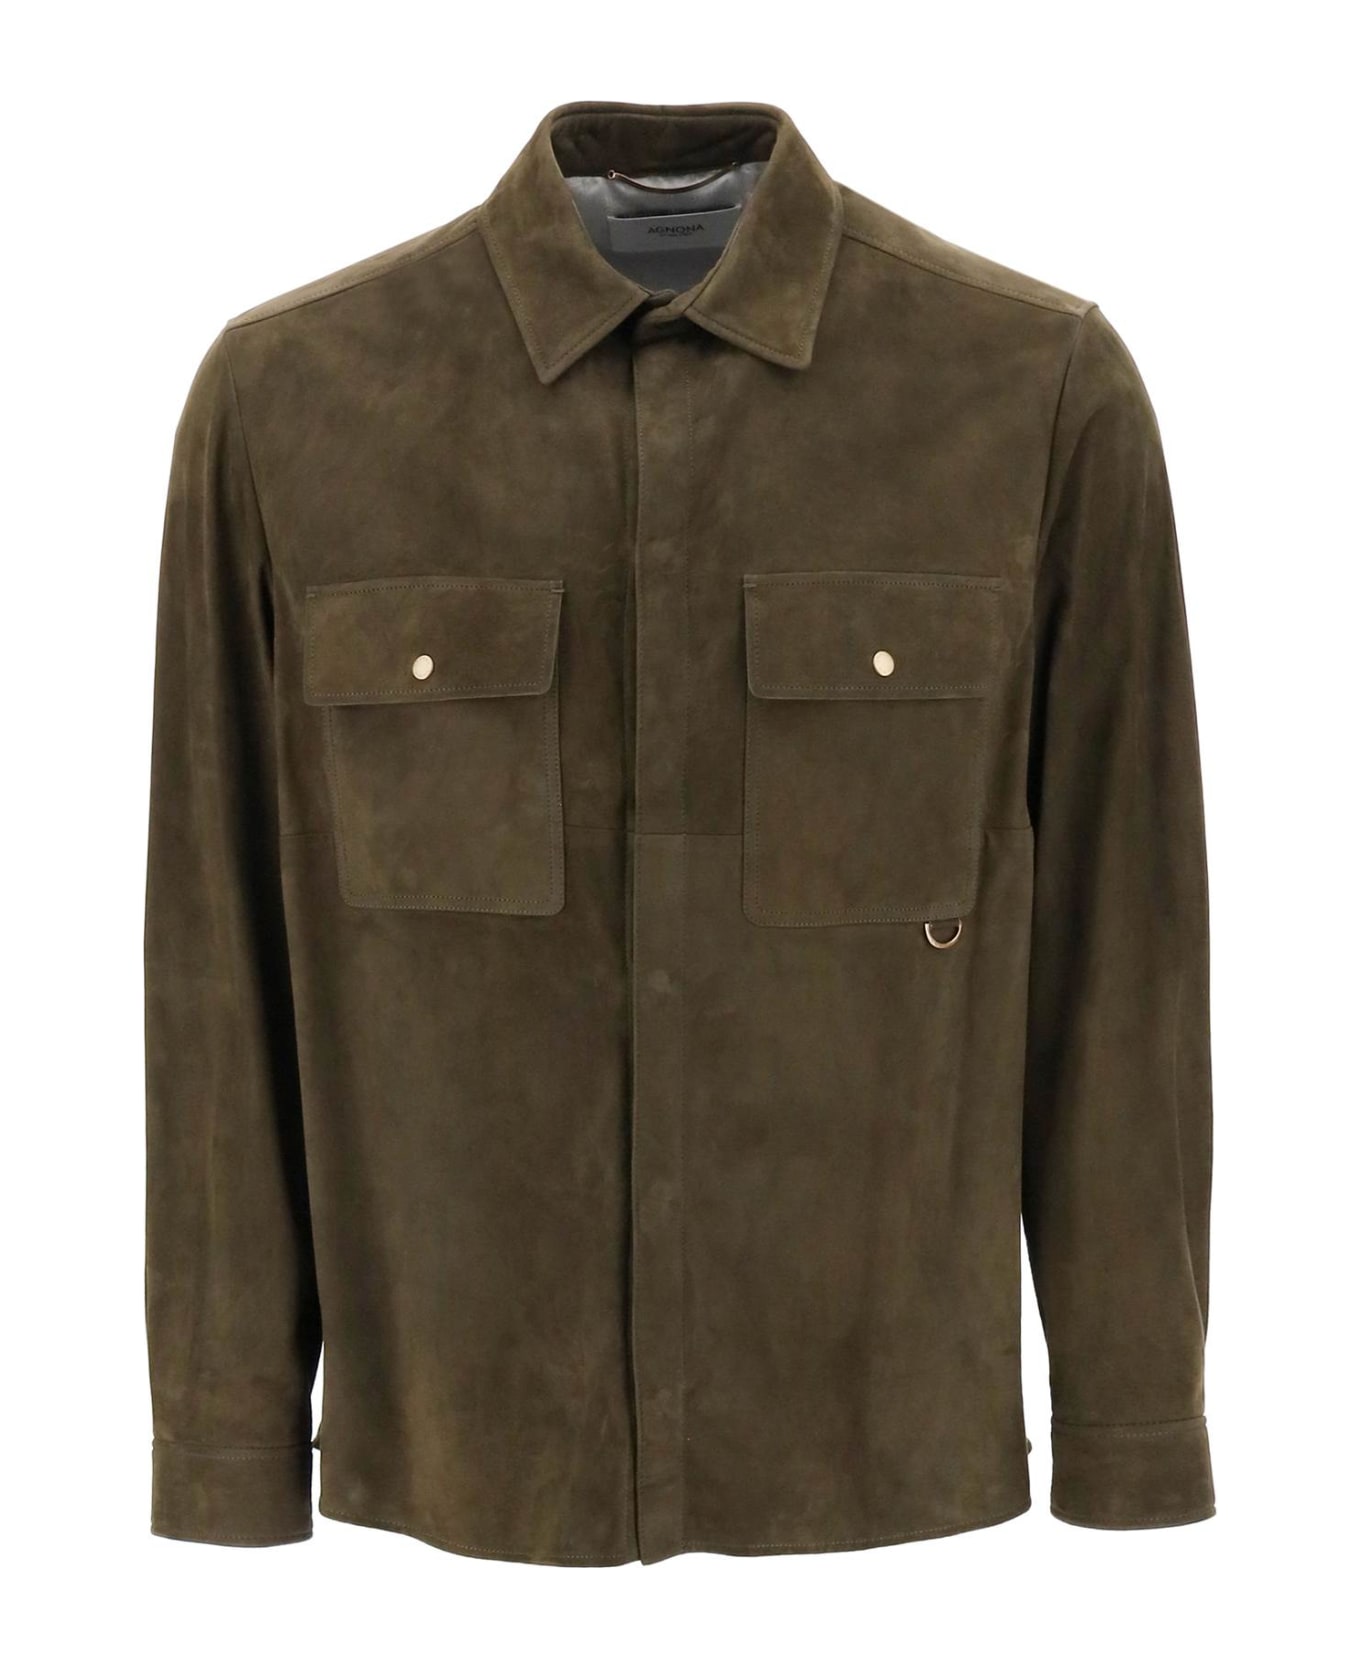 Agnona Suede Leather Overshirt - MOSS (Khaki)